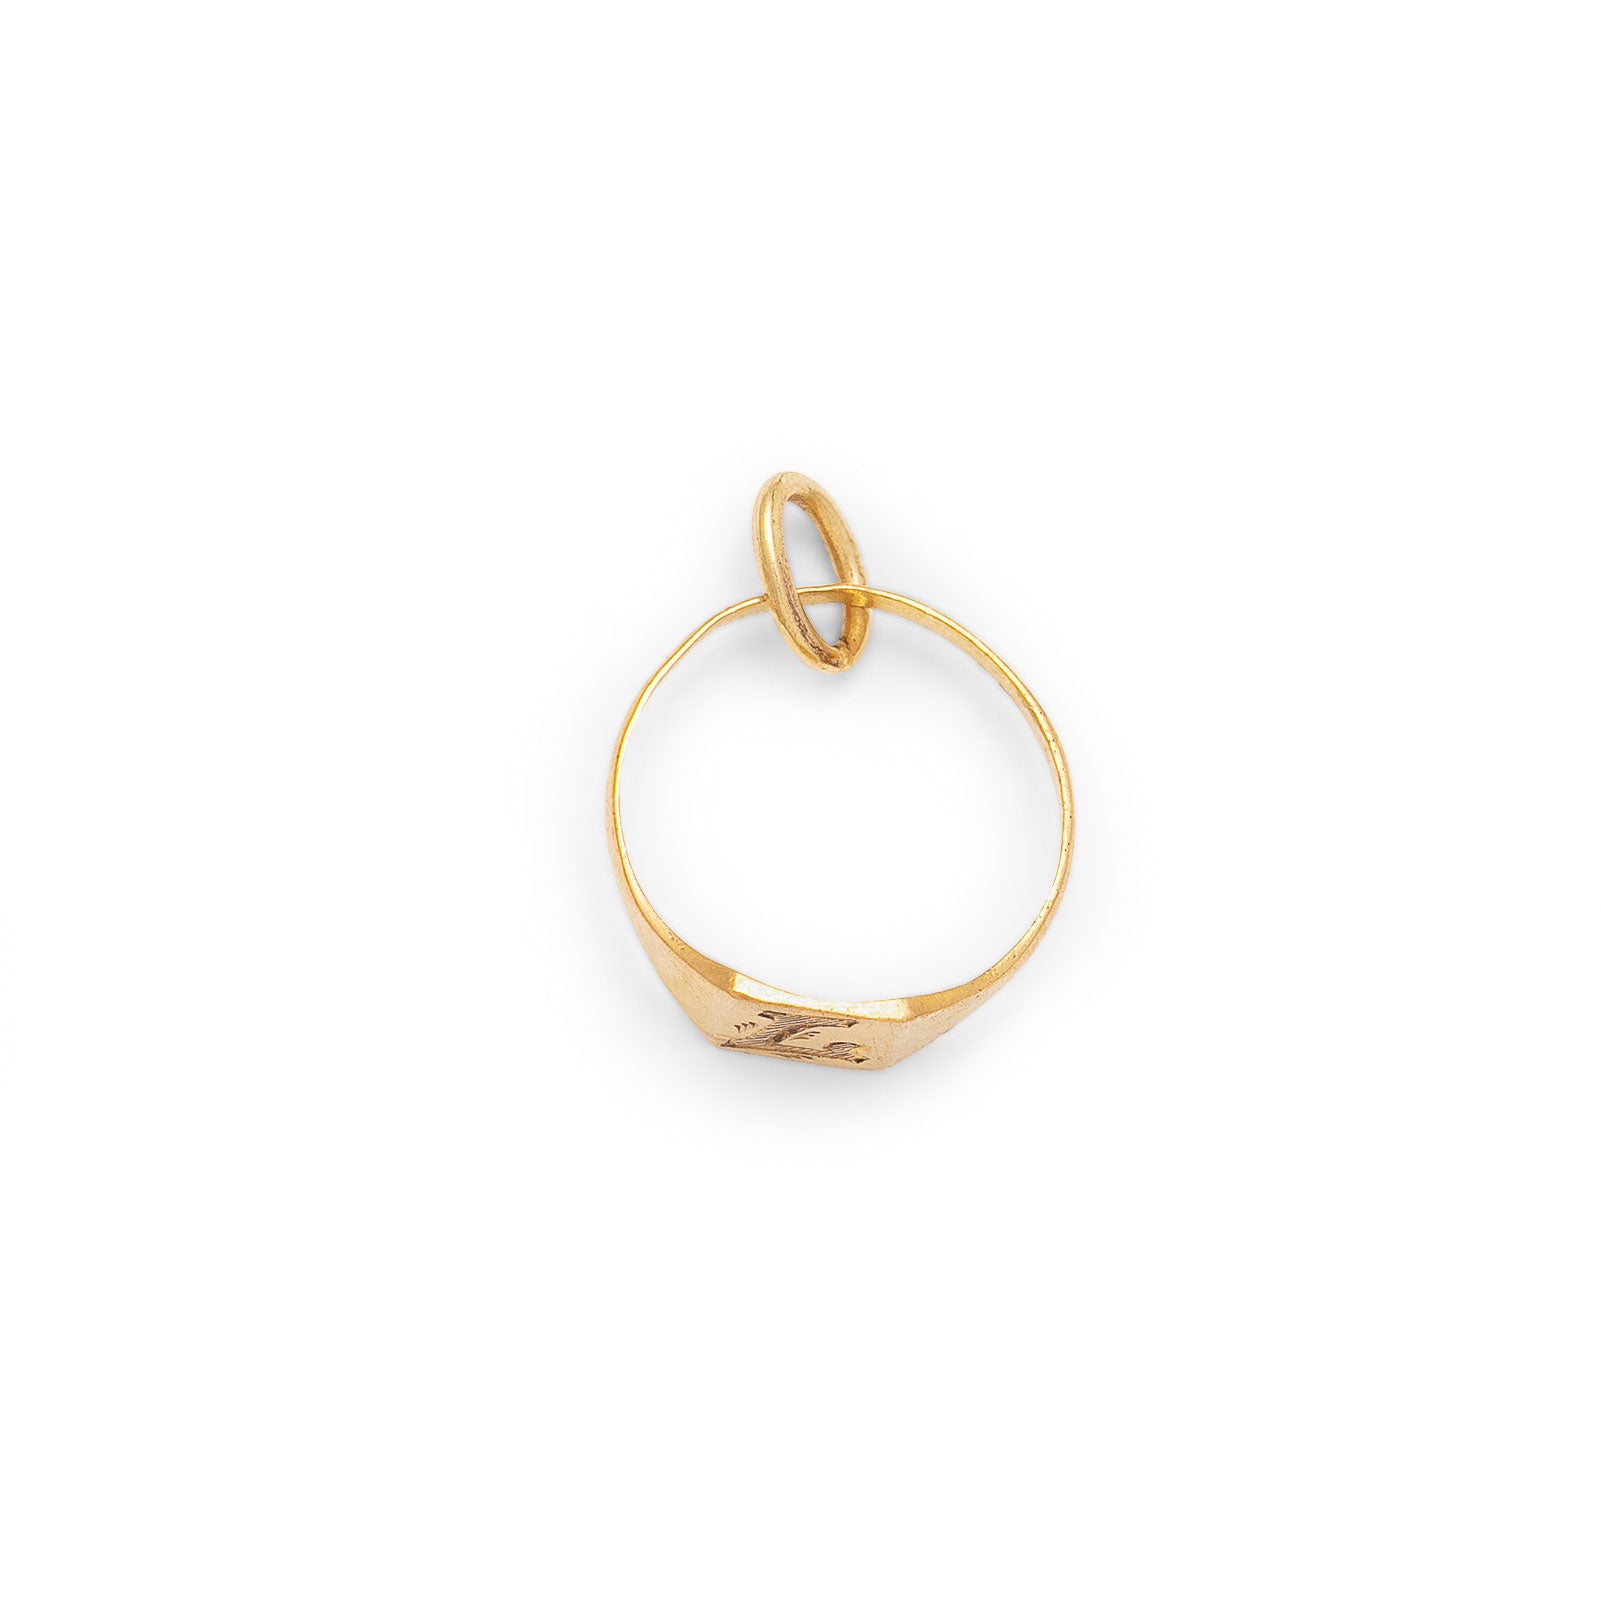 Portuguese 19K Gold "L" Charm Ring